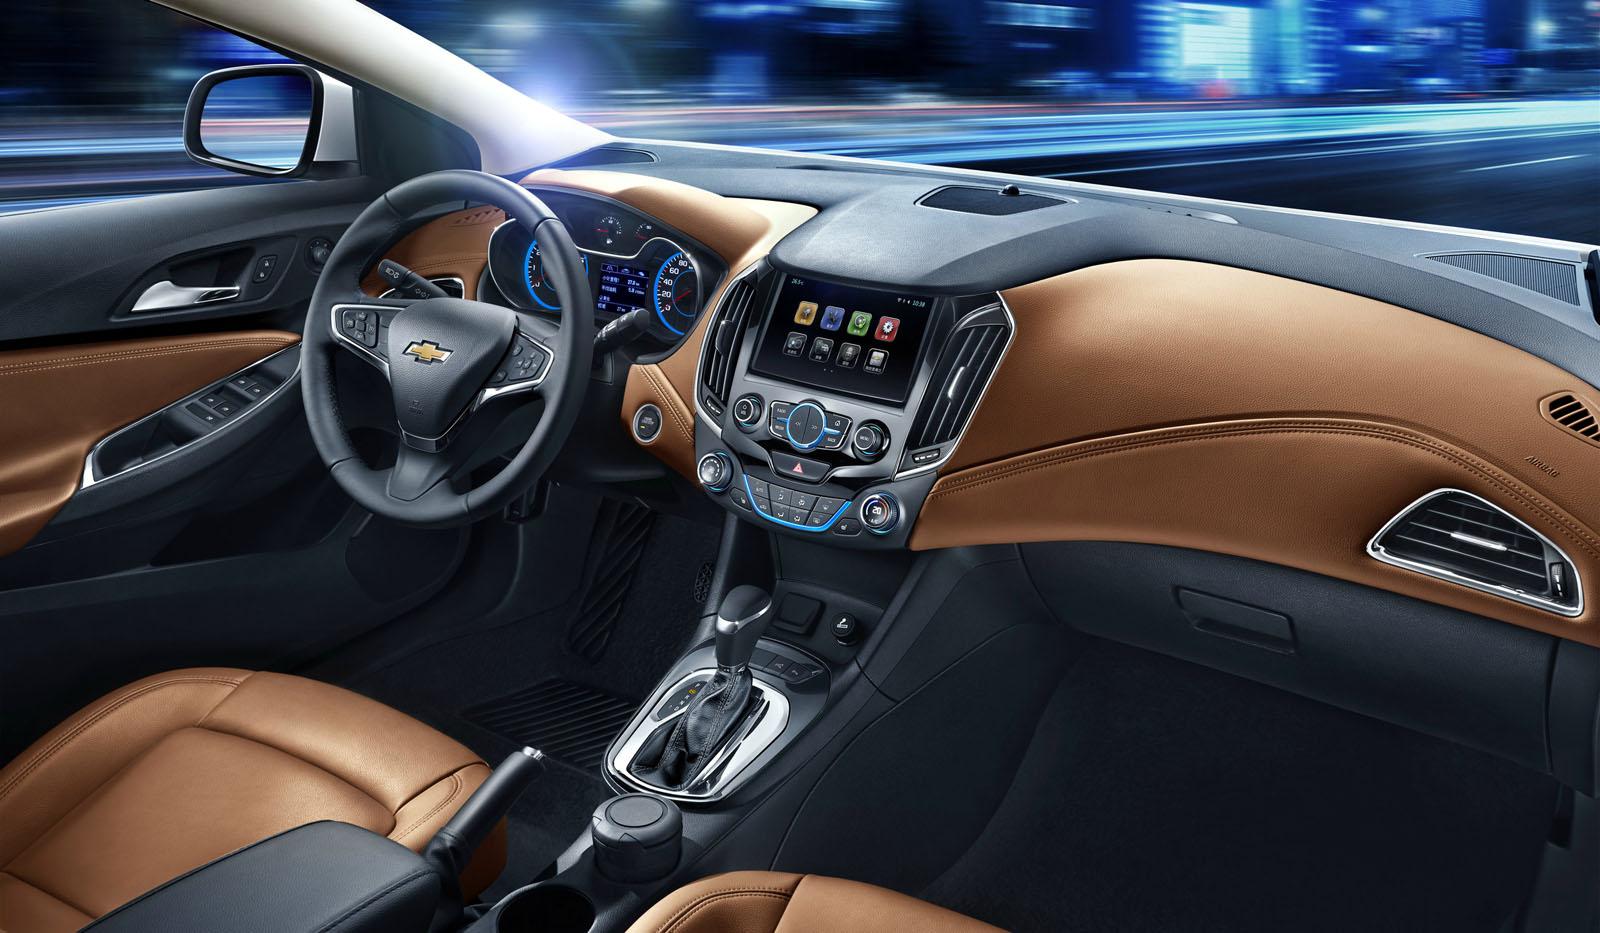 2015 Chevrolet Cruze S Interior Revealed